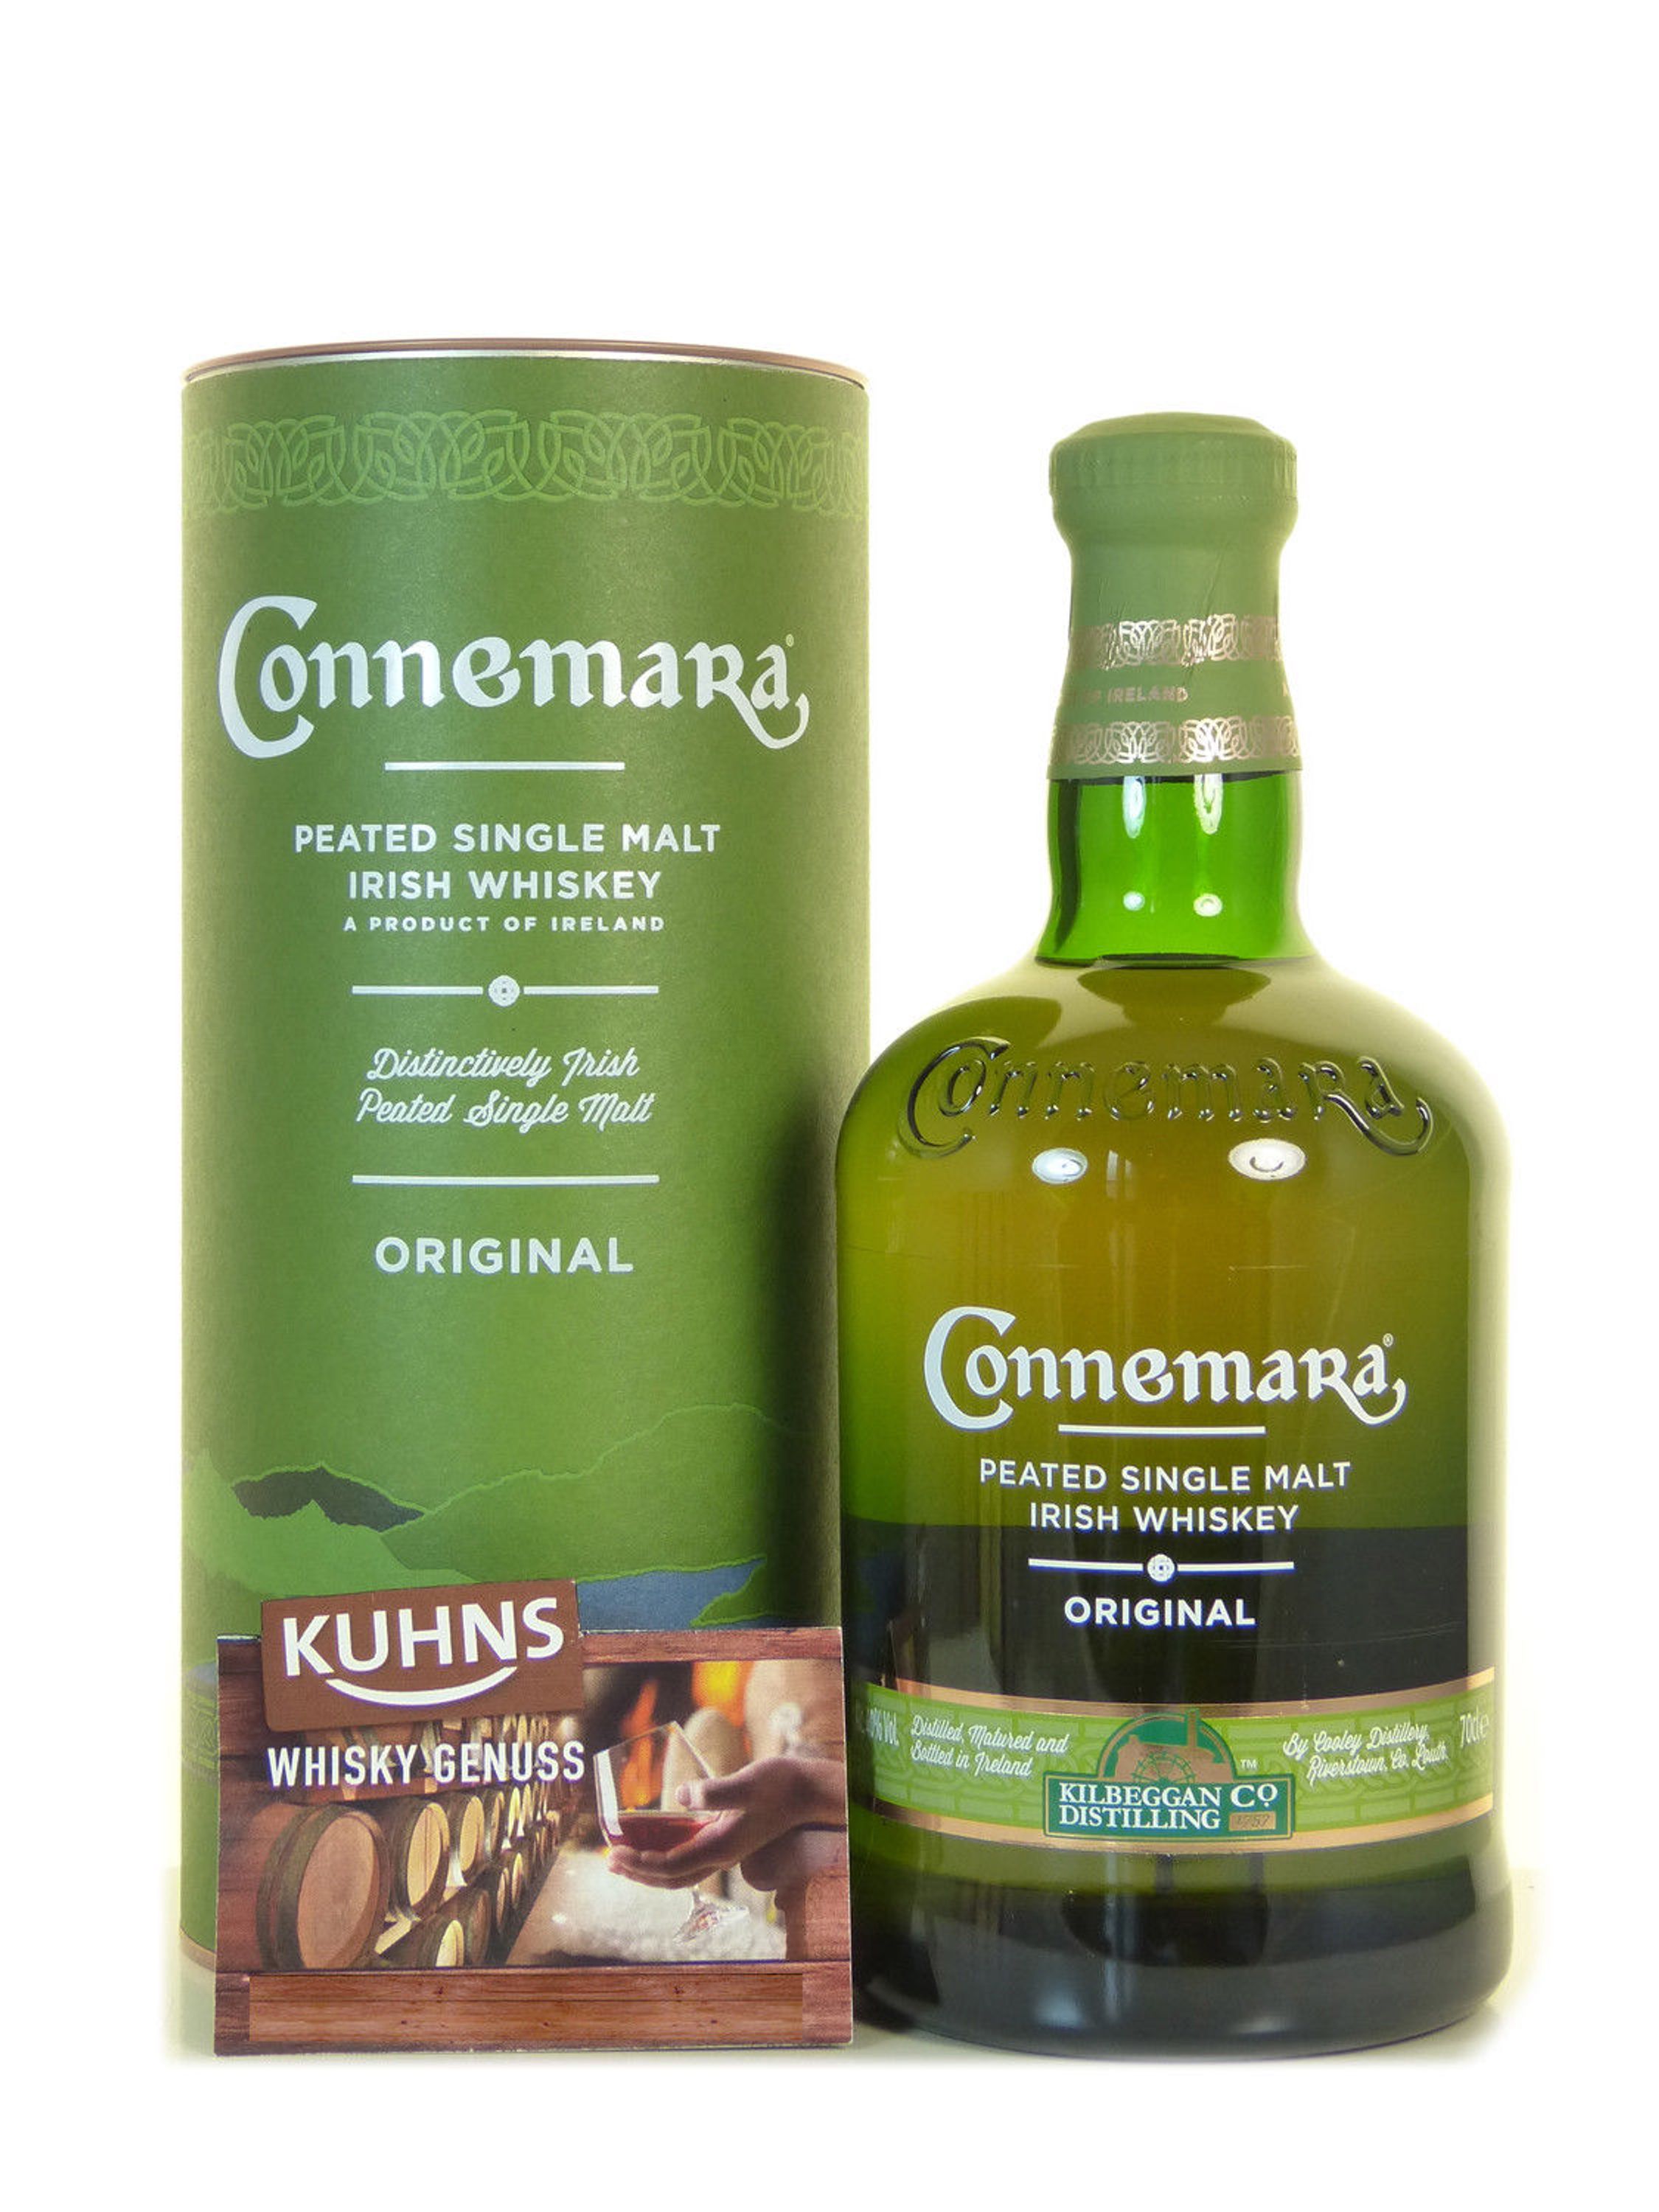 Connemara Original Peated Single Malt Irish Whiskey 0.7l, alc. 40% by volume